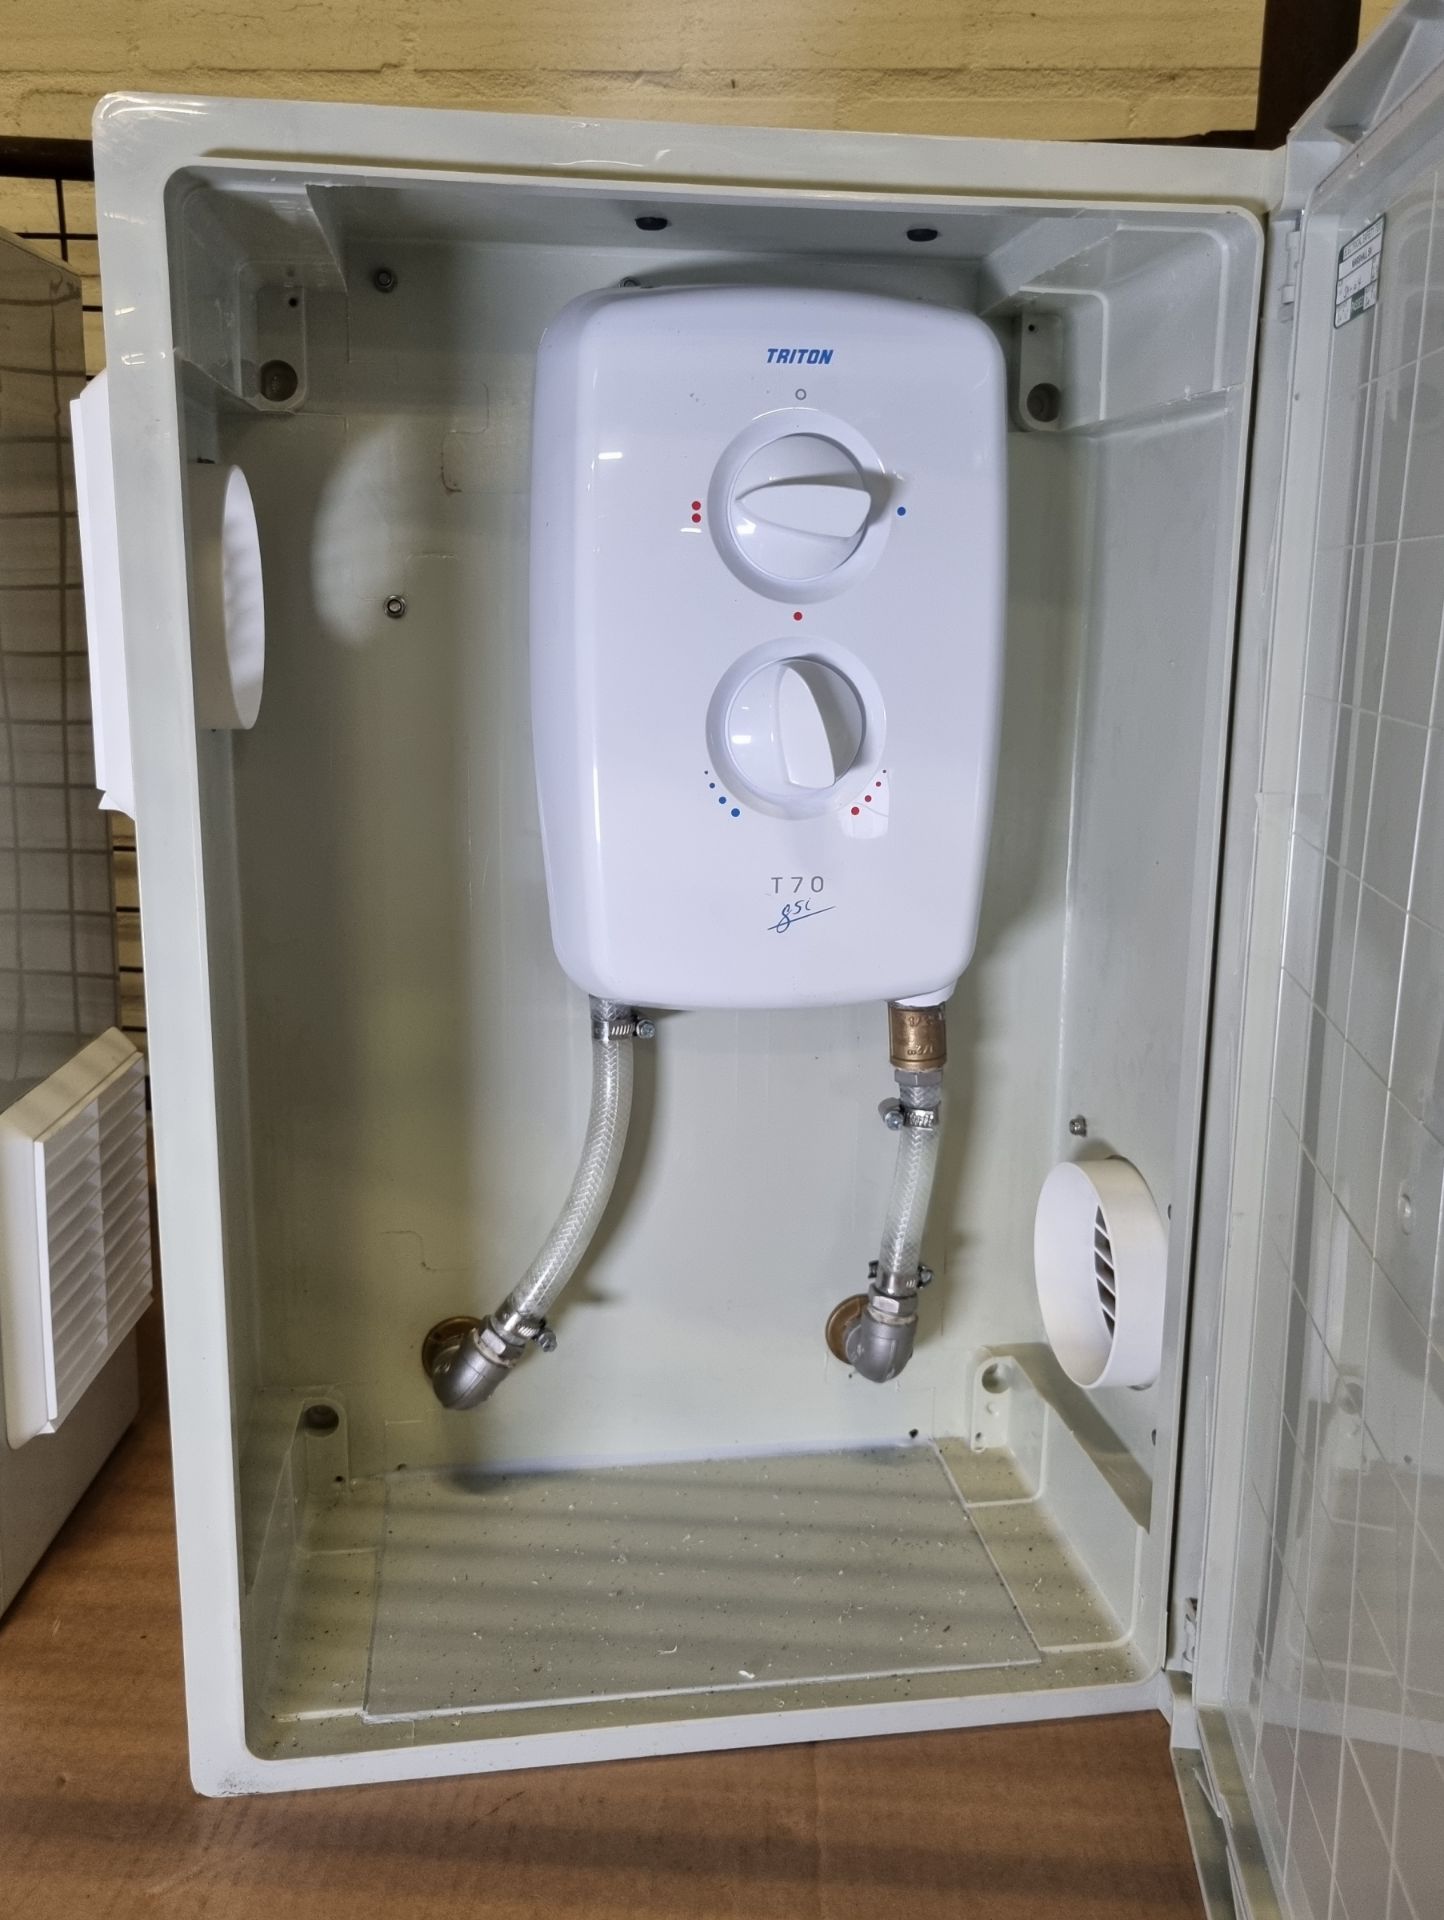 Triton T70 gsi shower unit in protective casing - 230V - 8.5Kw - L 43 x W 35 x H 60cm - Image 5 of 5